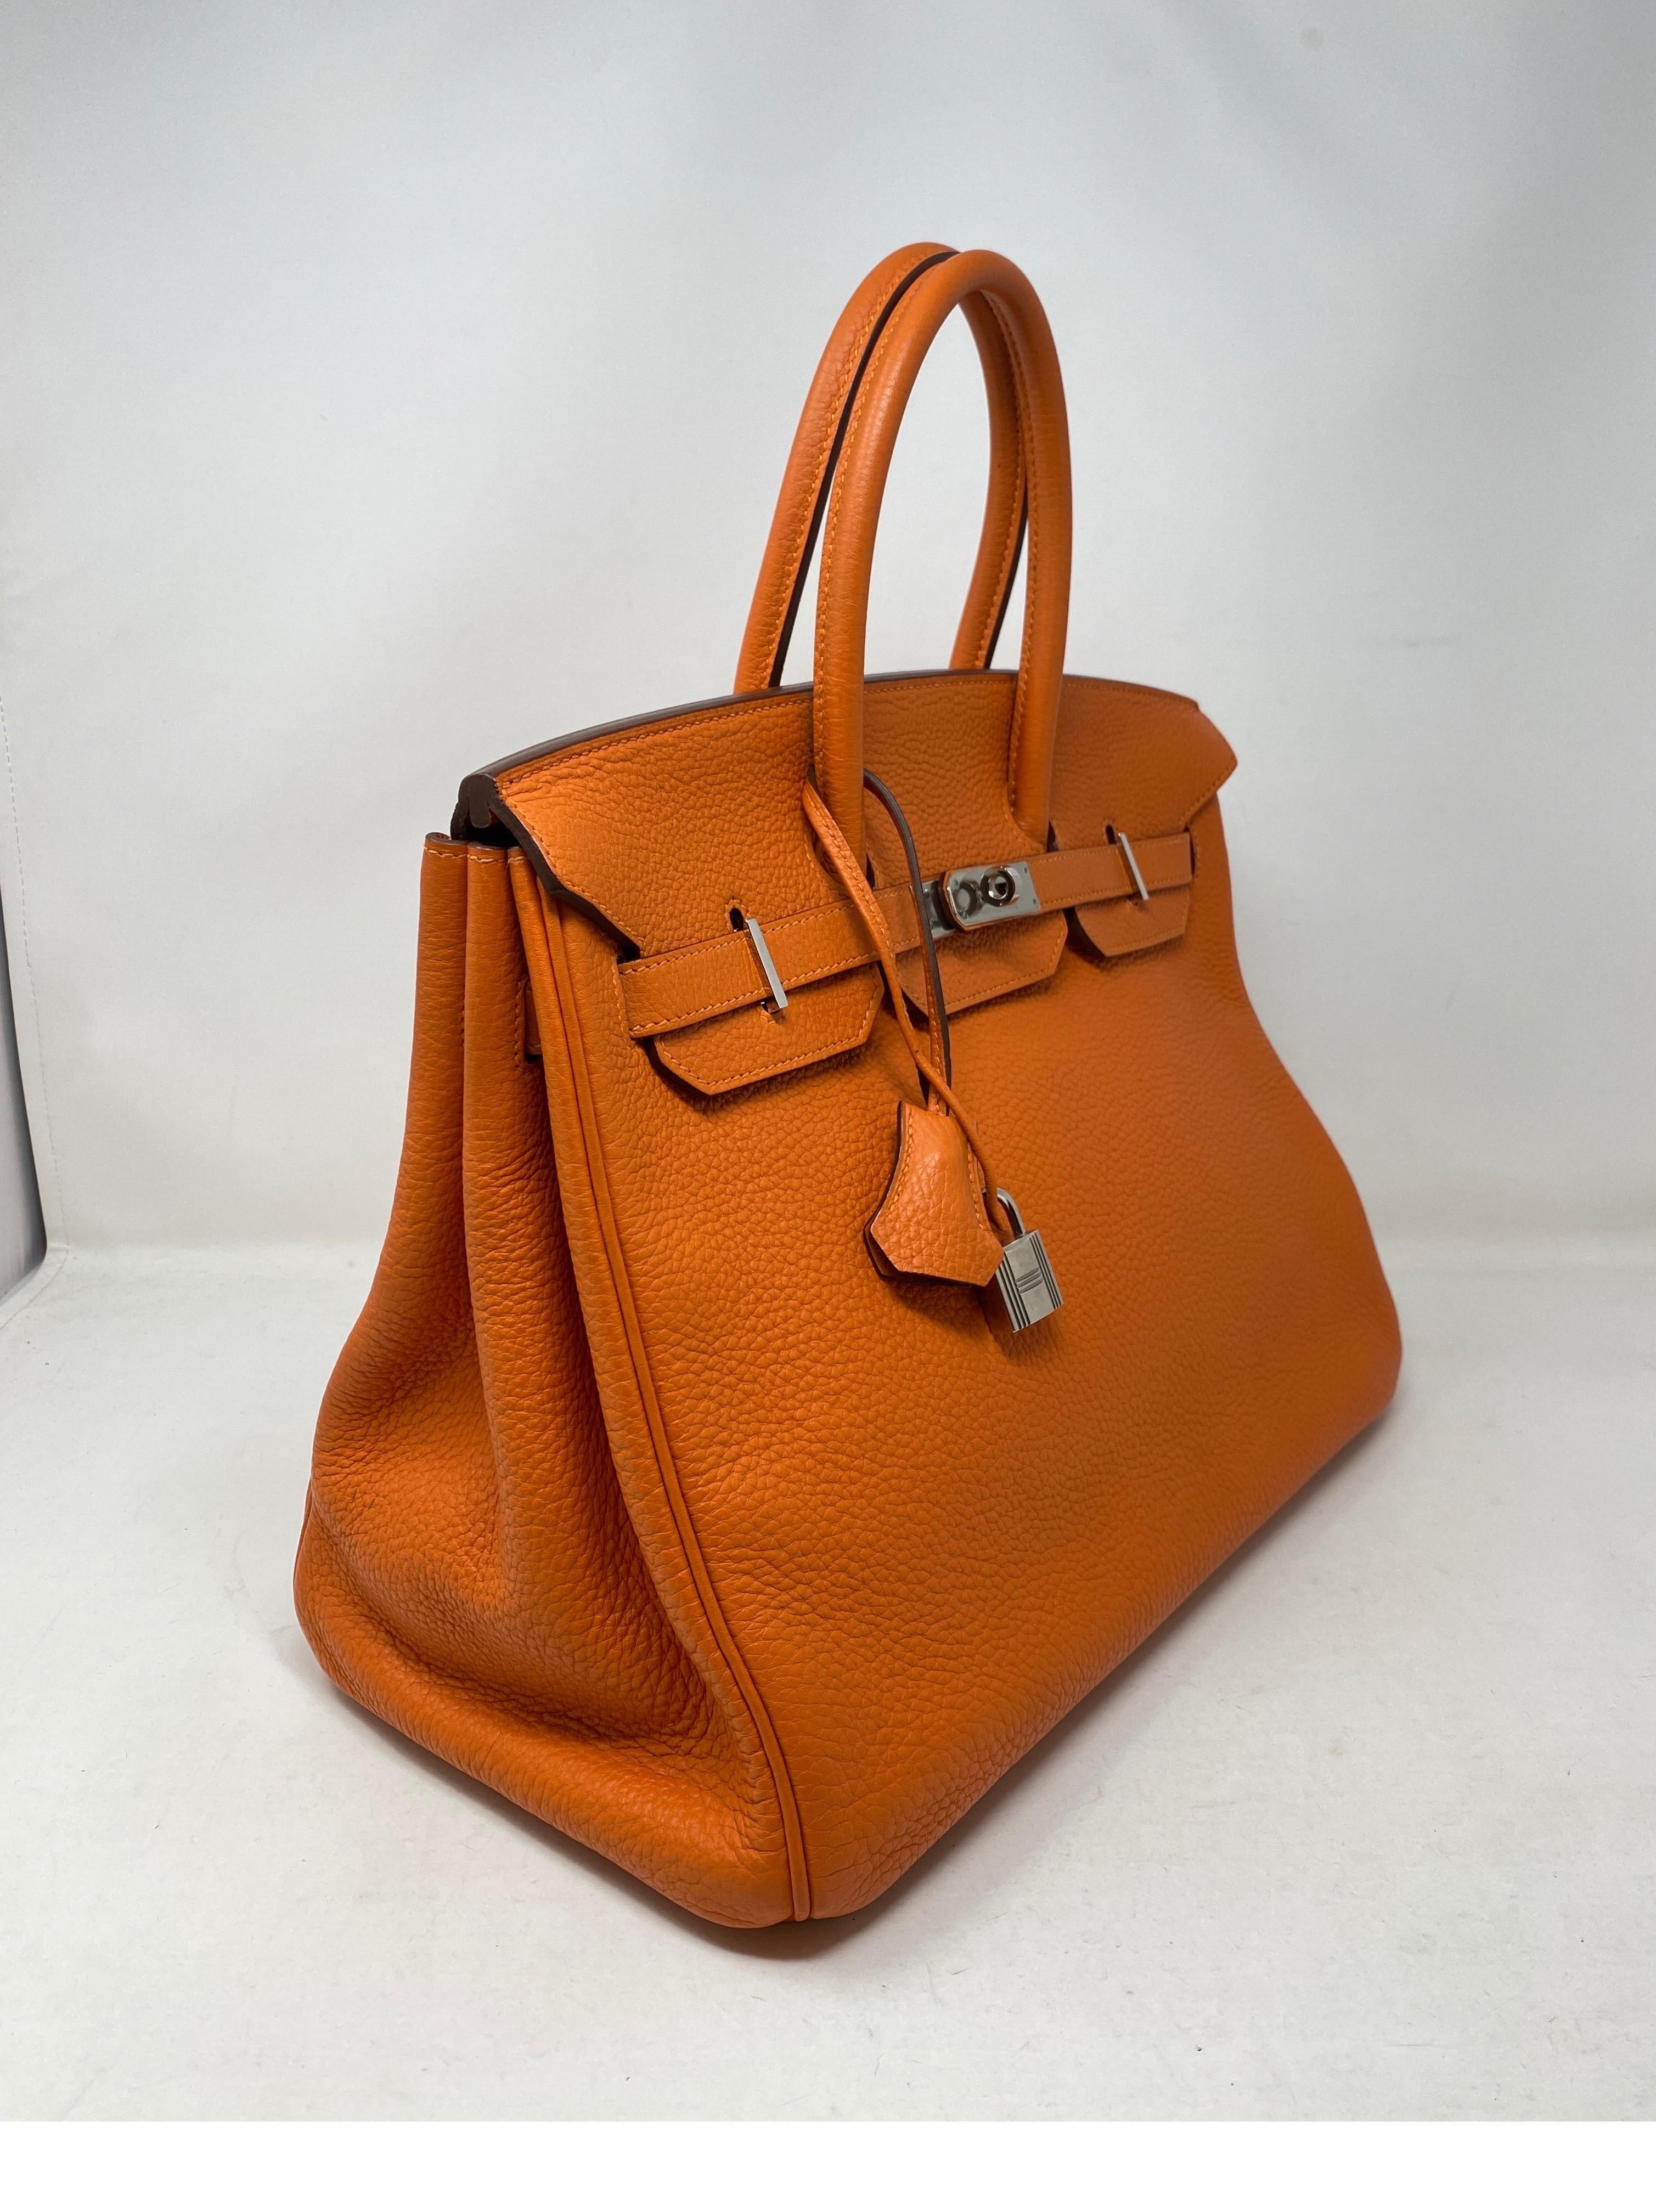 Hermes Birkin Orange 35 Bag. Palladium hardware. Classic orange color. Excellent condition. Includes clochette, lock, keys, and dust cover. Guaranteed authentic. 